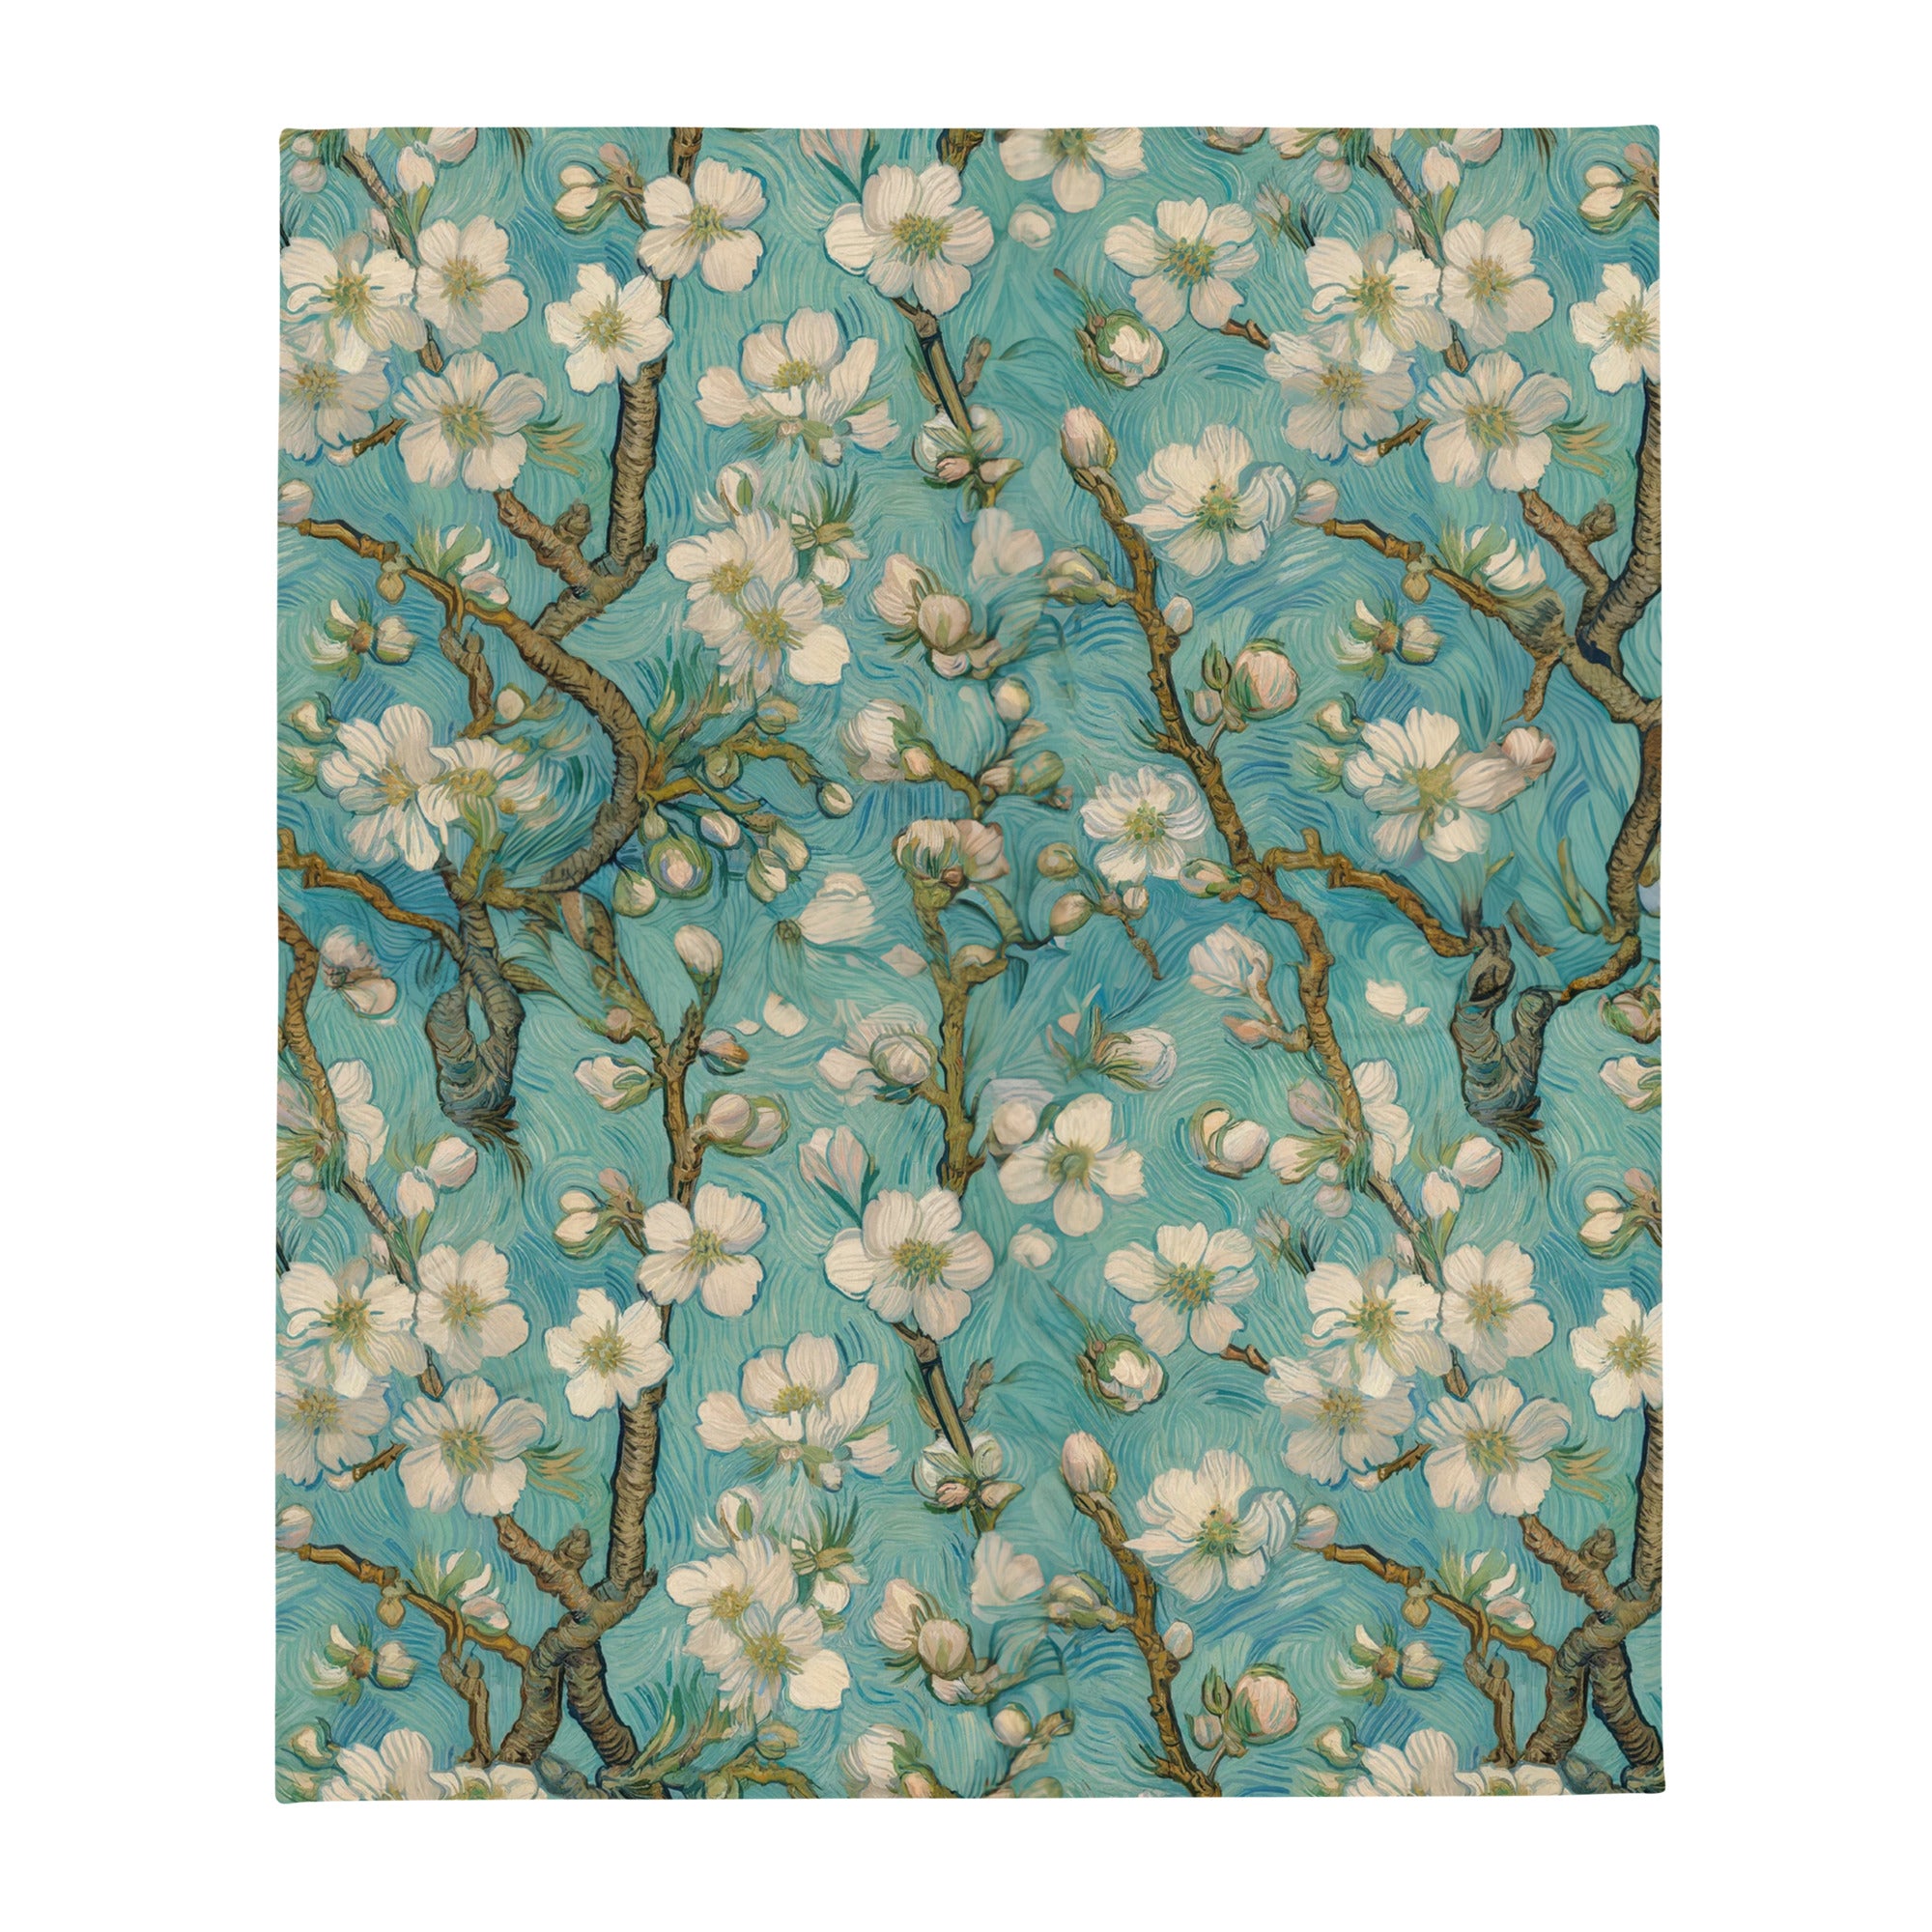 Vincent van Gogh 'Almond Blossom' Famous Painting Throw Blanket | Premium Art Throw